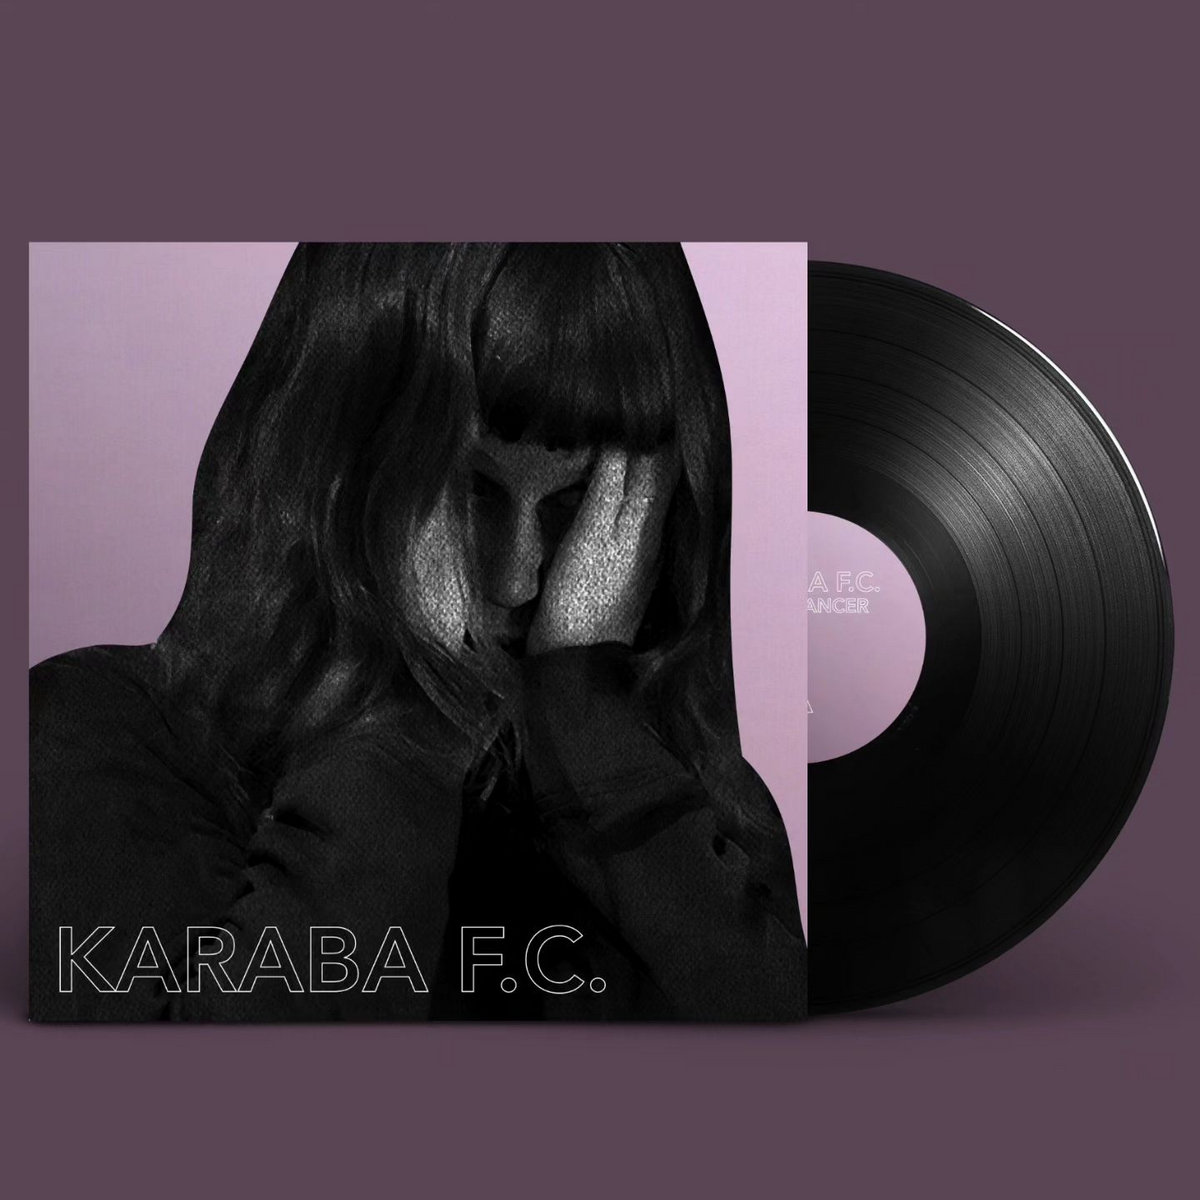 Vinyle April Dancer de Karaba-F.C